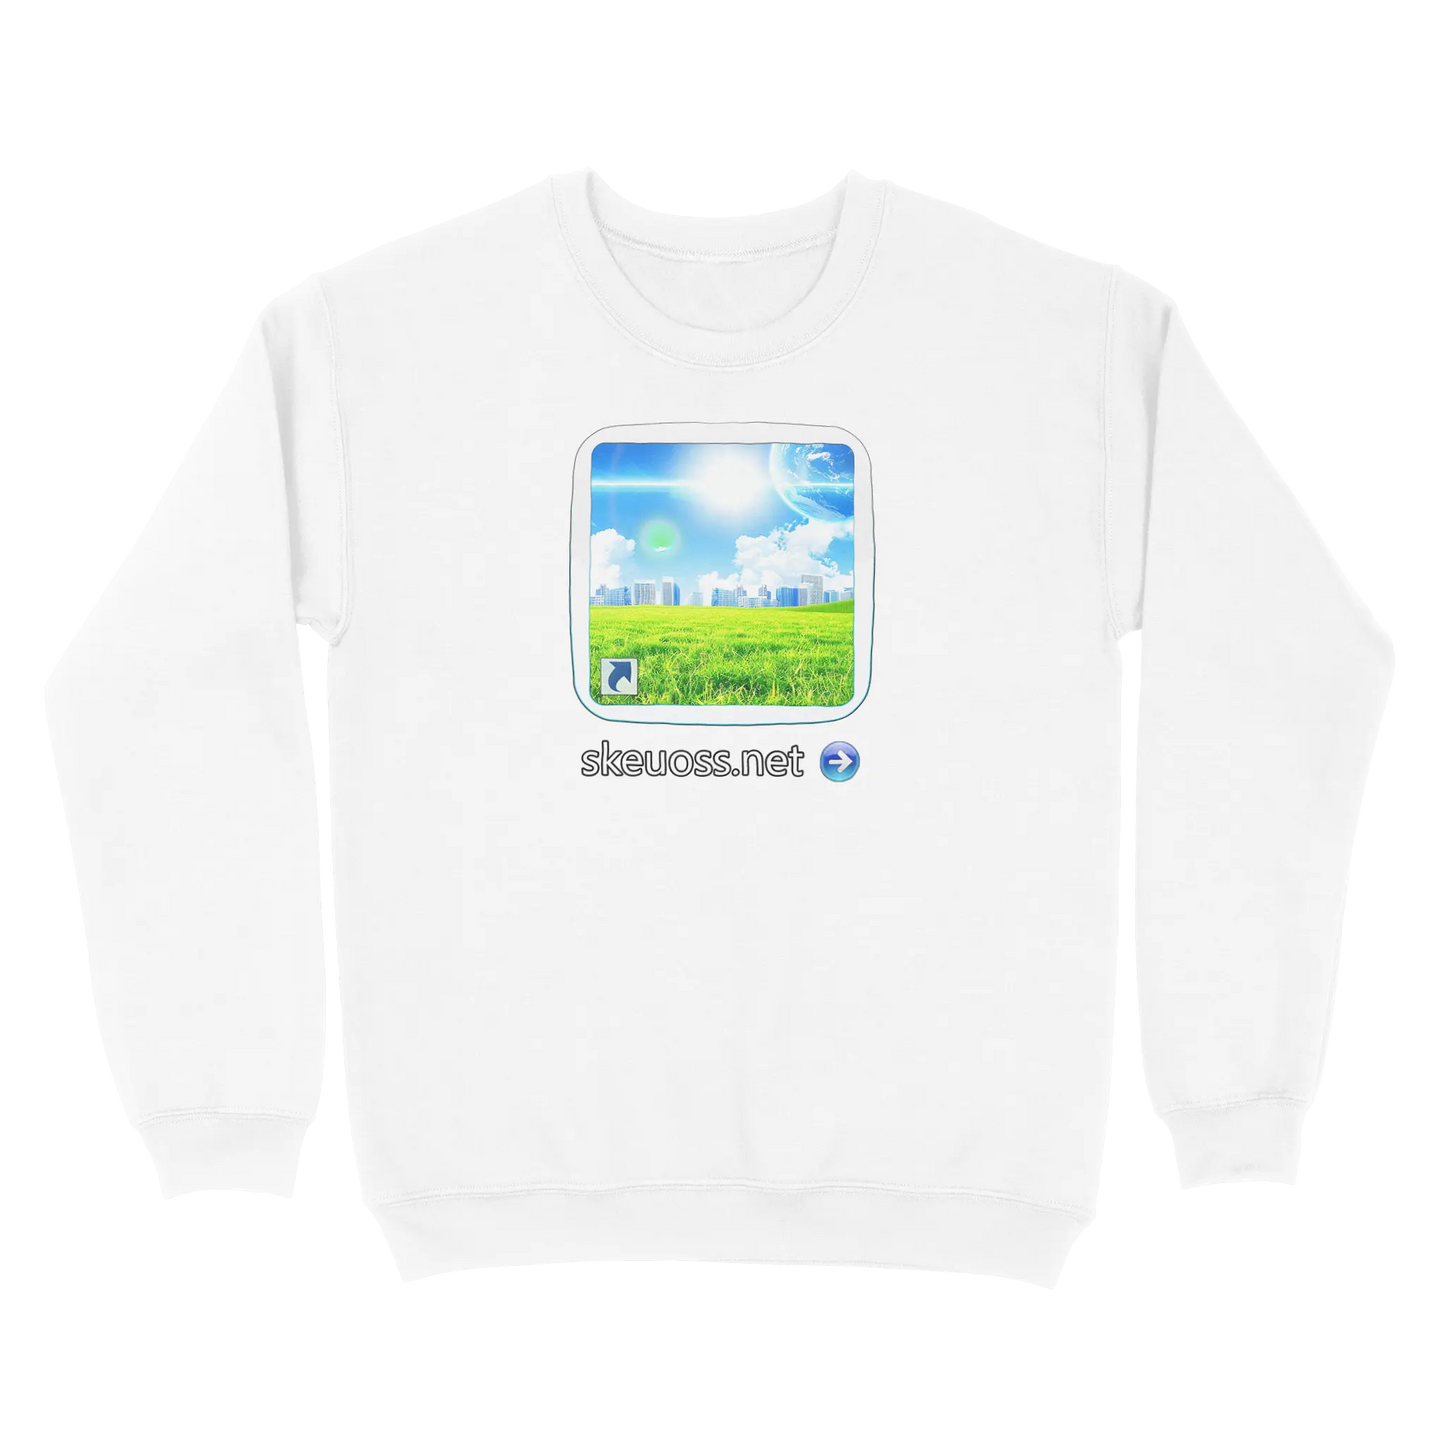 Frutiger Aero Sweatshirt - User Login Collection - User 147